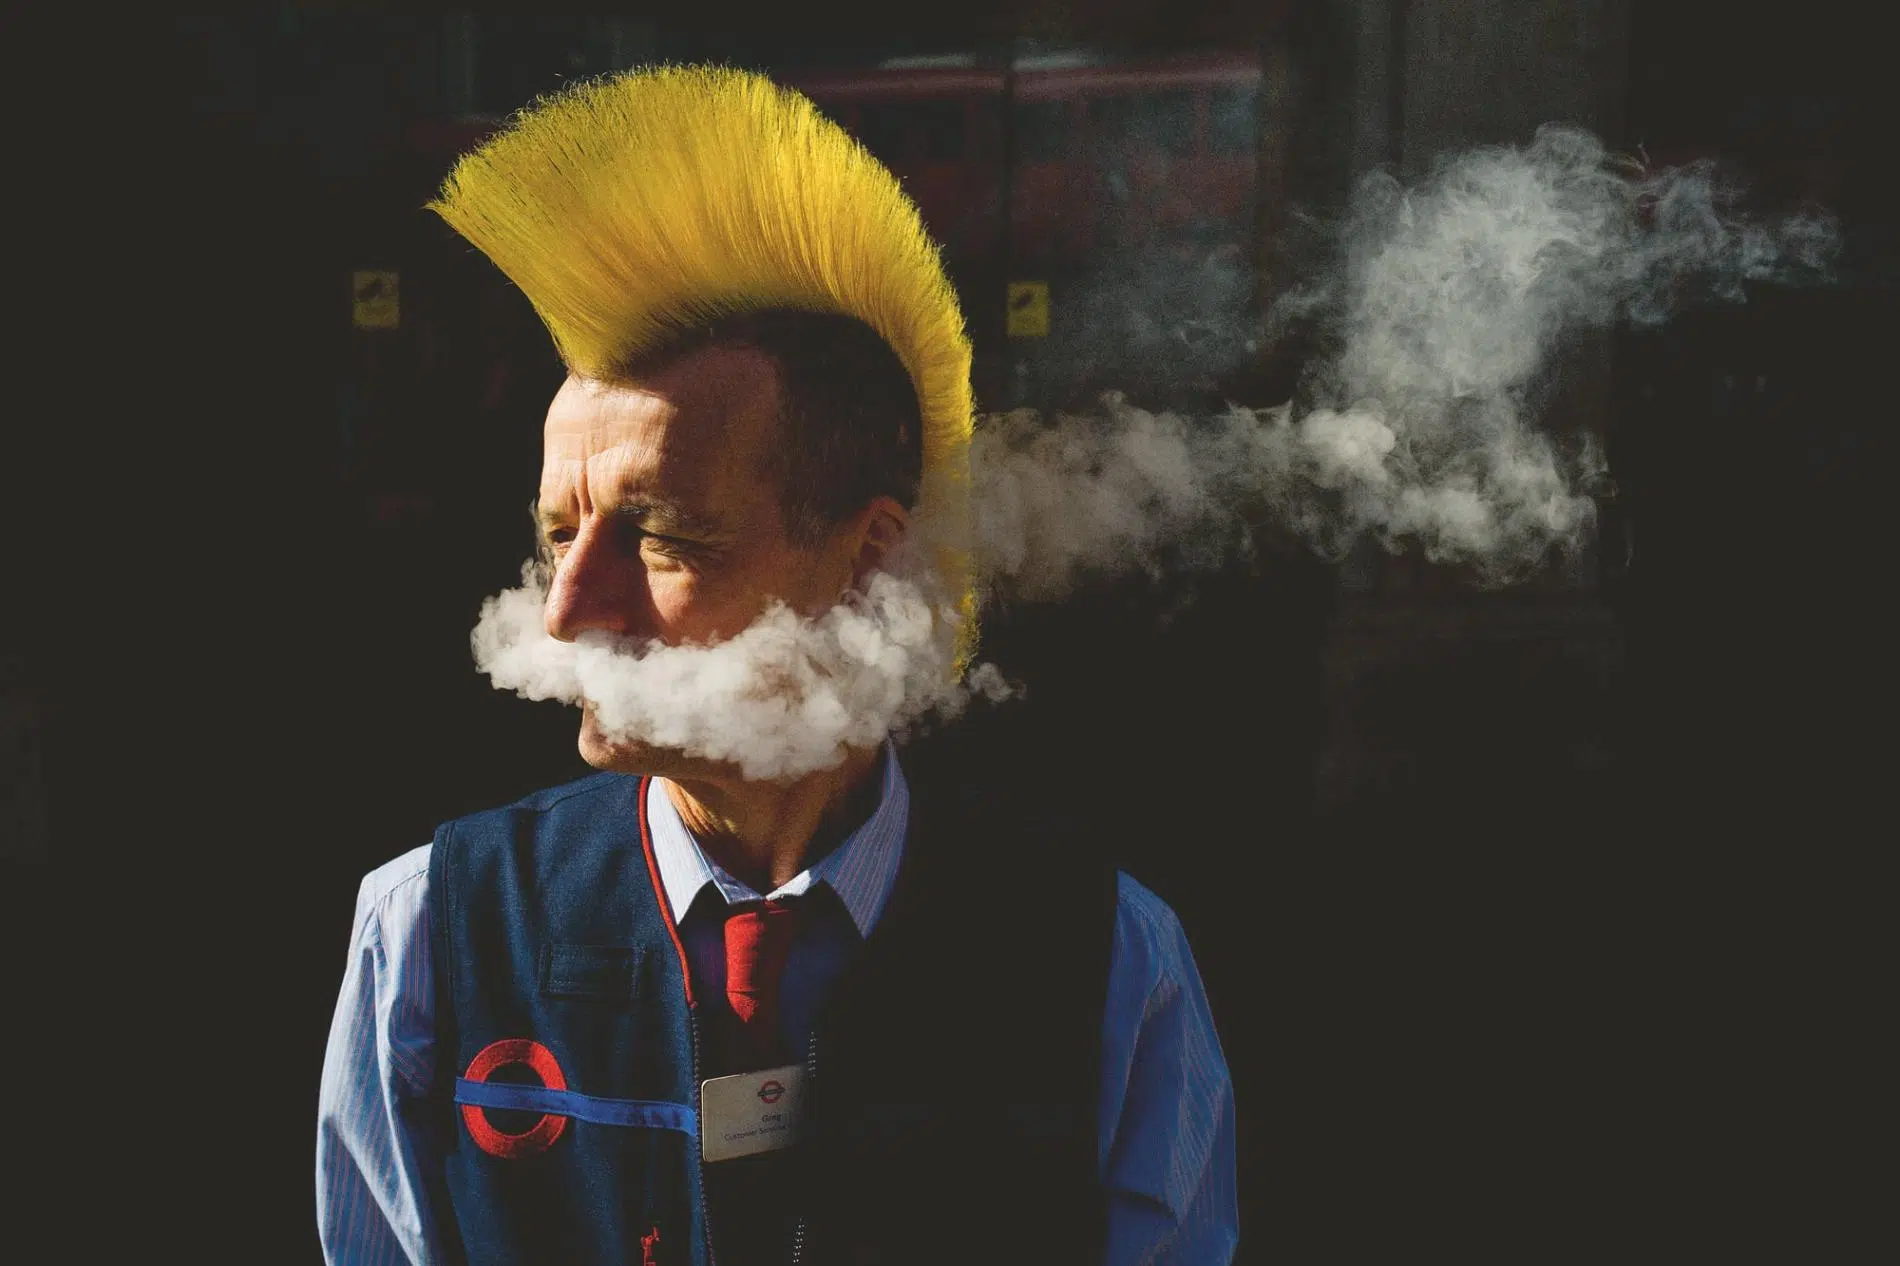 Matt Stuart fotografo callejero serendipia punk